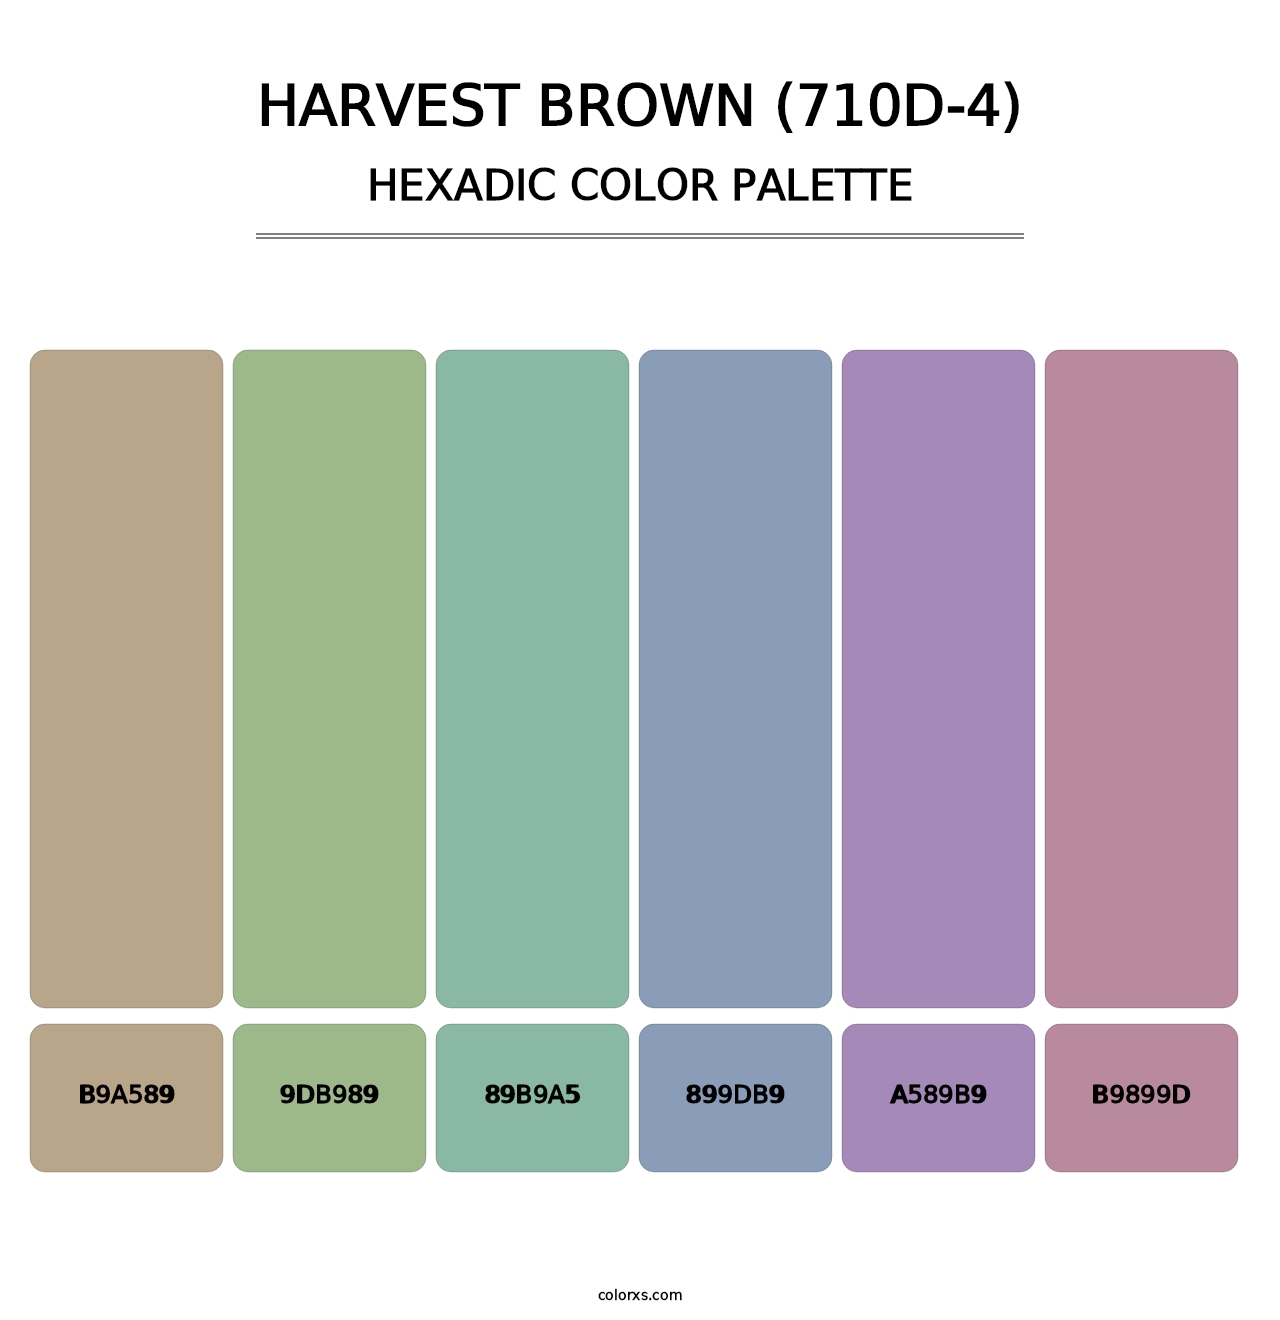 Harvest Brown (710D-4) - Hexadic Color Palette